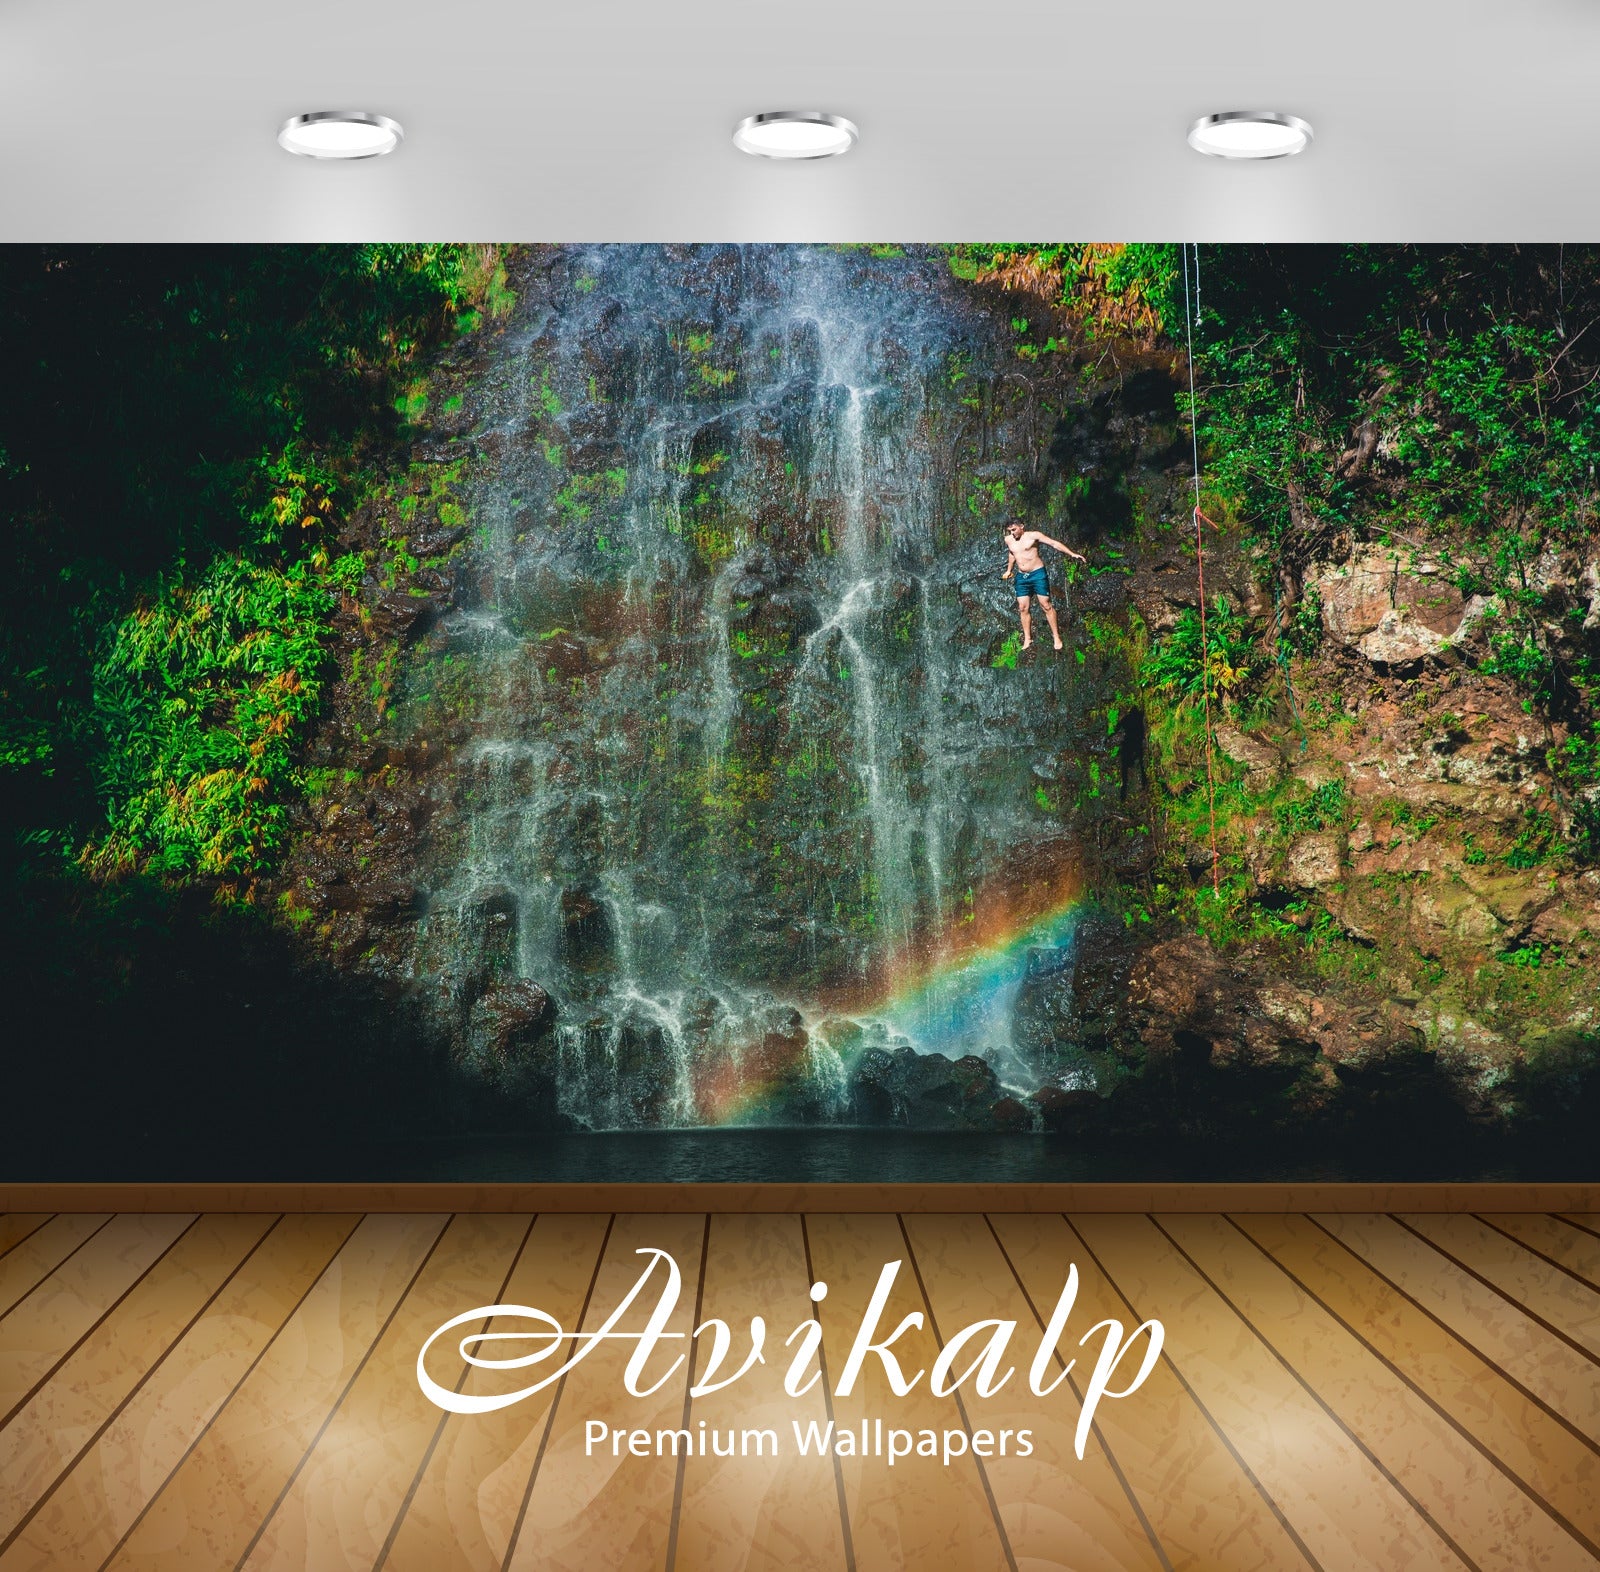 Avikalp Exclusive Awi5024 Waterfall Mountain Full HD Wallpapers for Living room, Hall, Kids Room, Ki